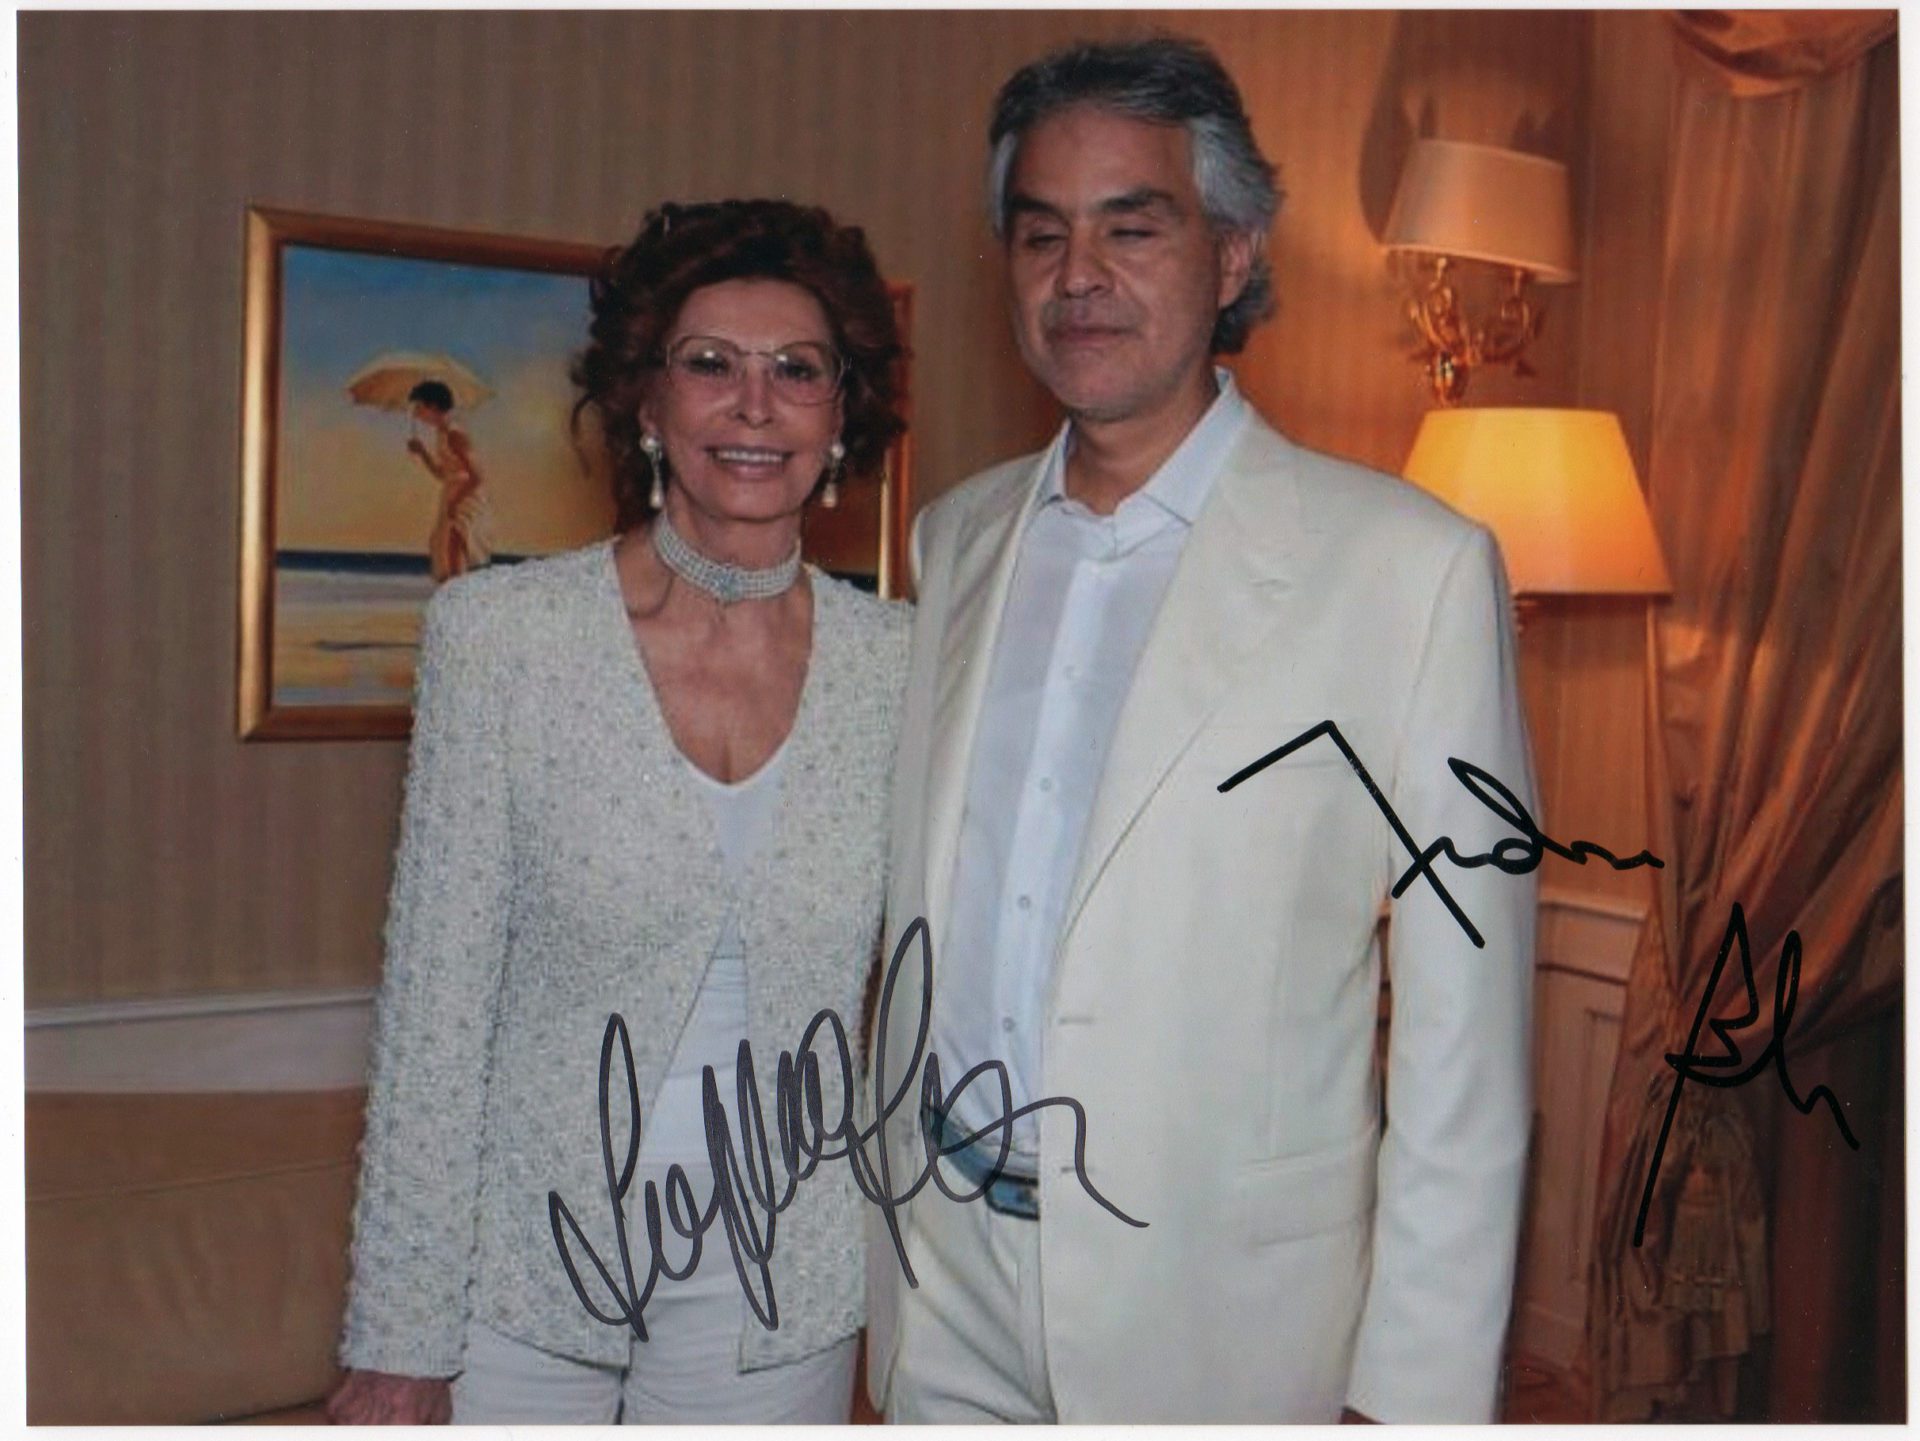 Enrica Cenzatti biography: who is Andrea Bocelli's first wife